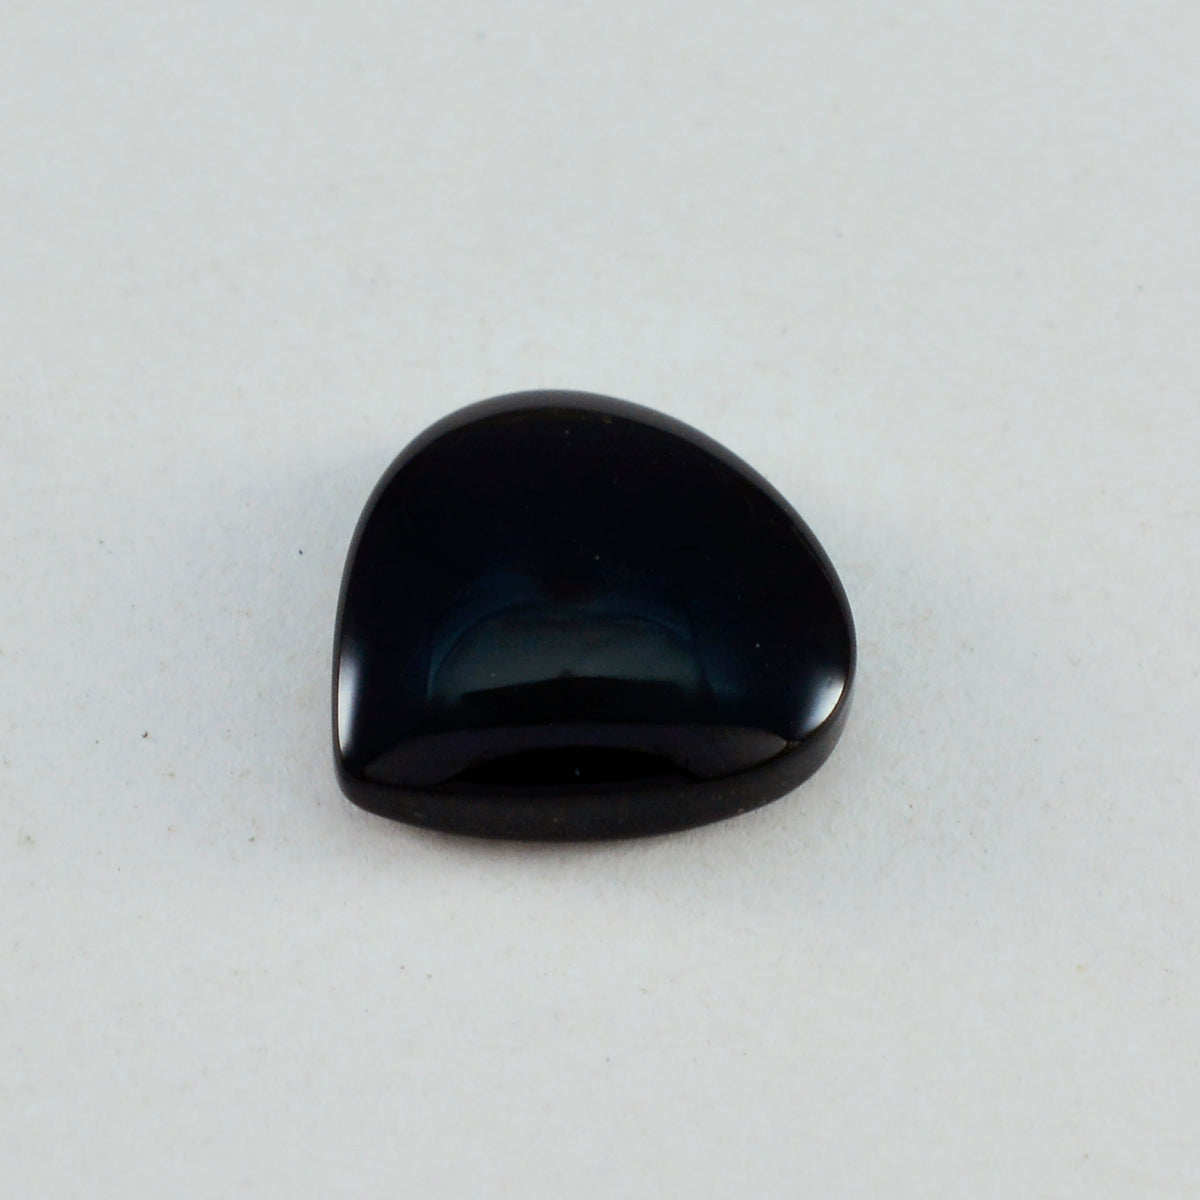 Riyogems 1PC Black Onyx Cabochon 14x14 mm Heart Shape AA Quality Loose Stone